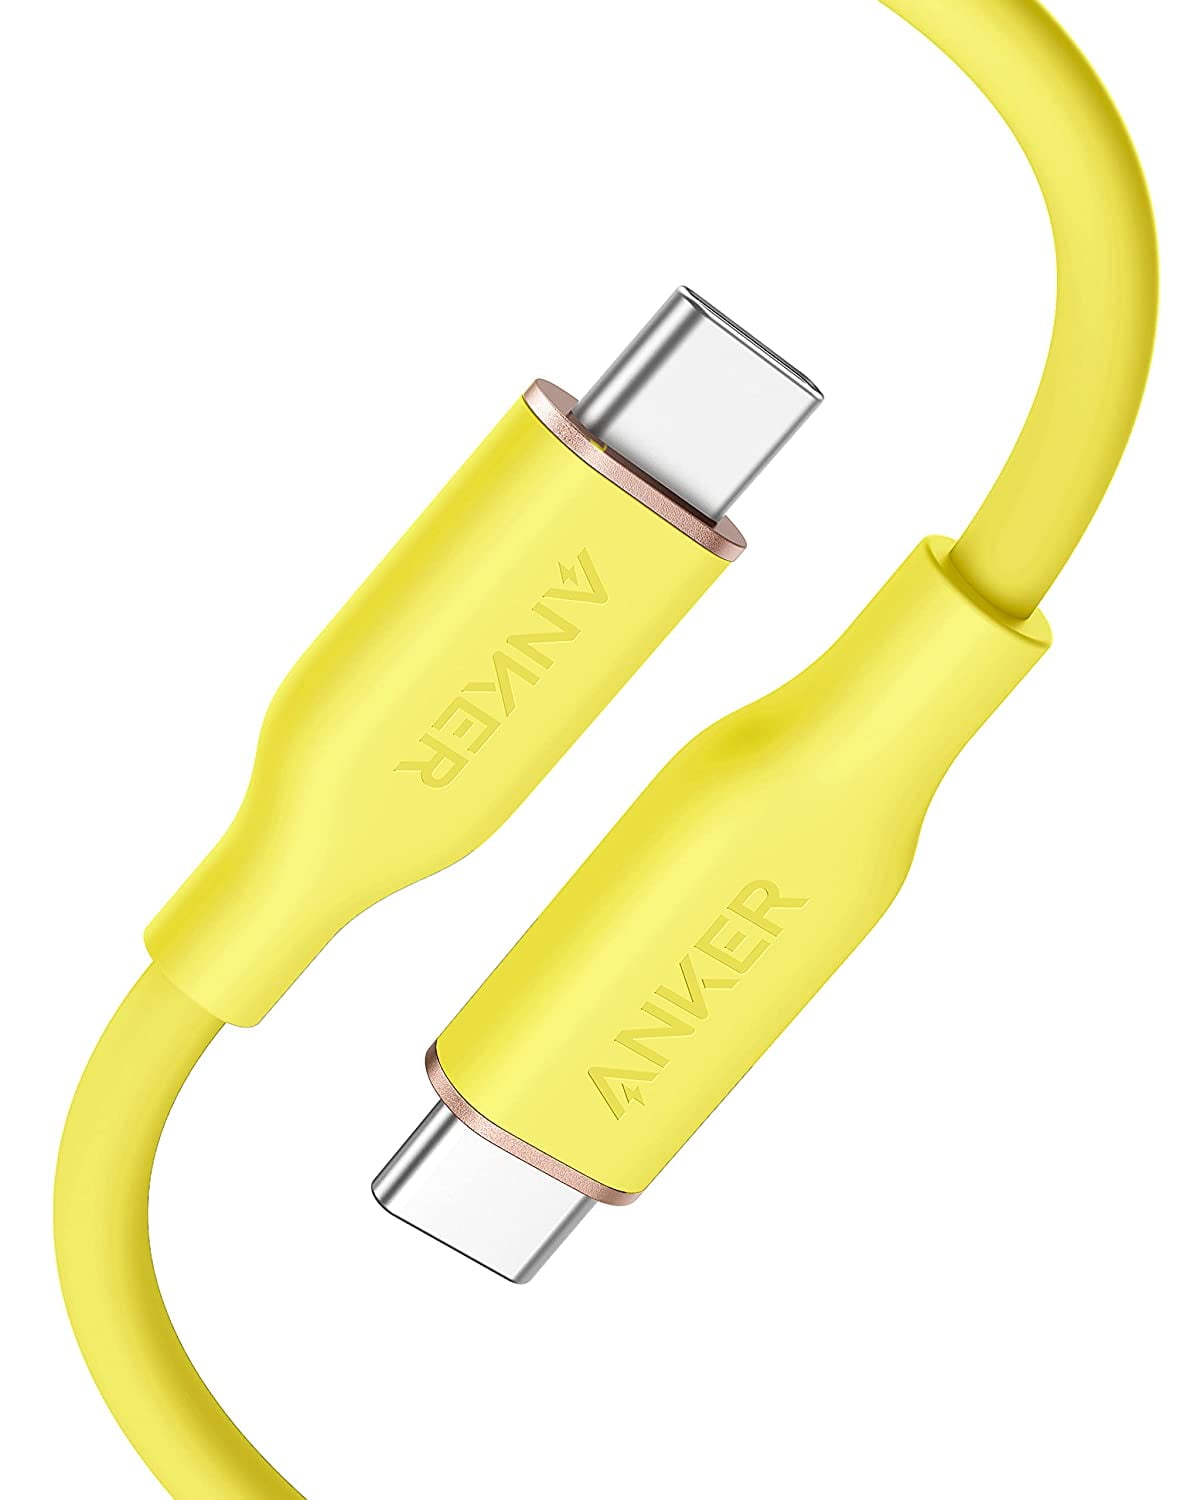 38 mtr. Yellow - KEVLAR Micro Cord